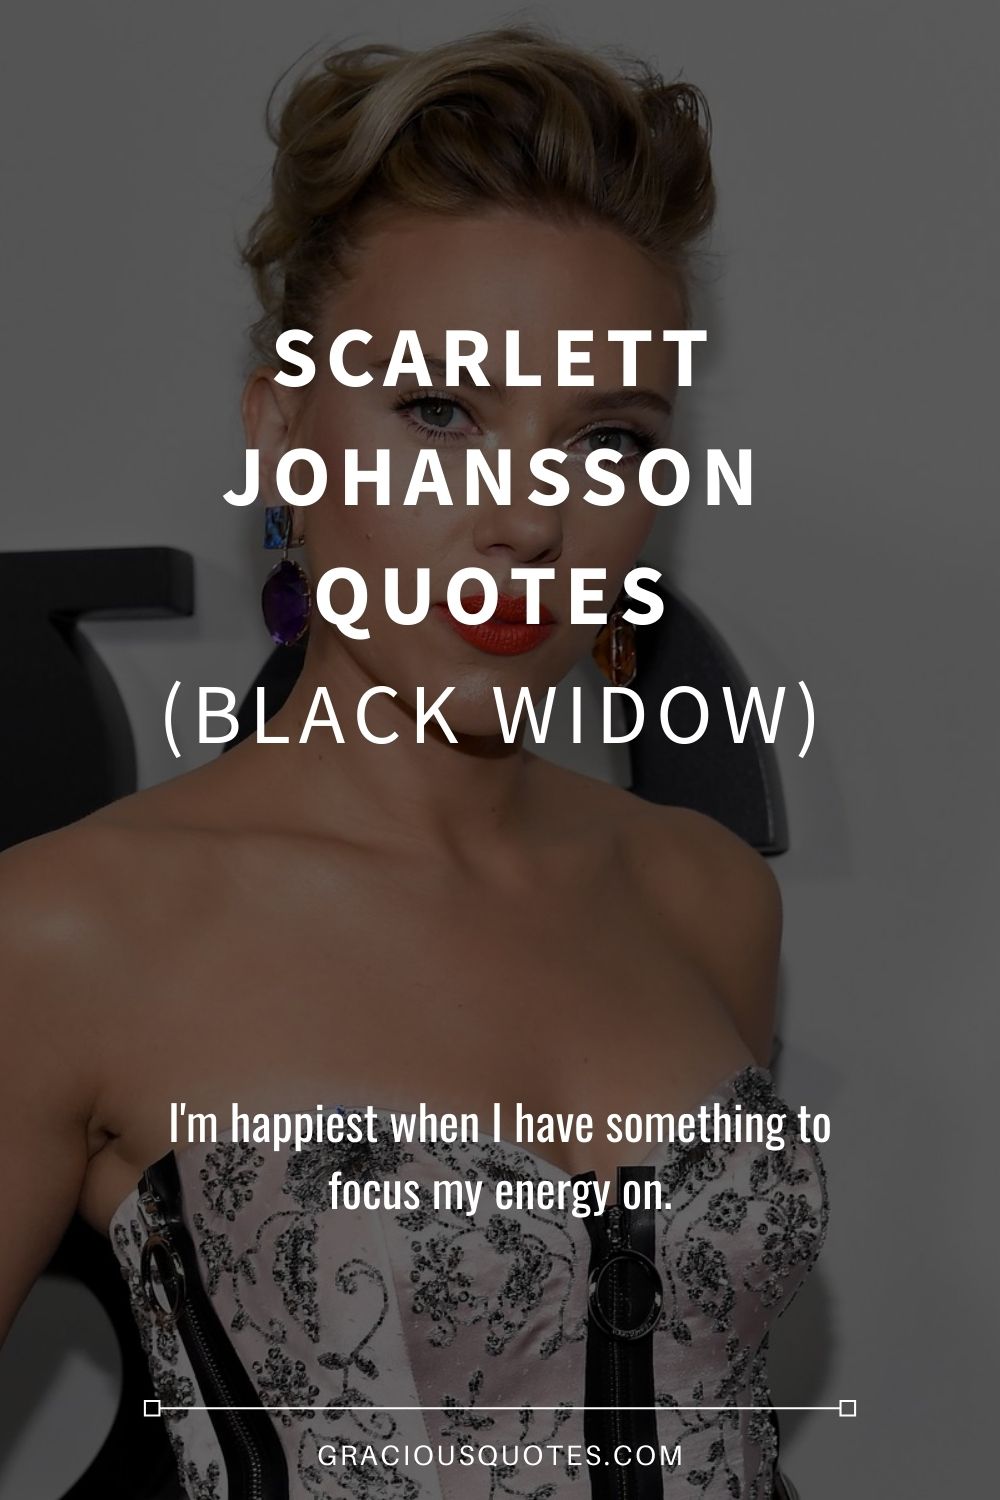 Scarlett Johansson Quotes (BLACK WIDOW) - Gracious Quotes